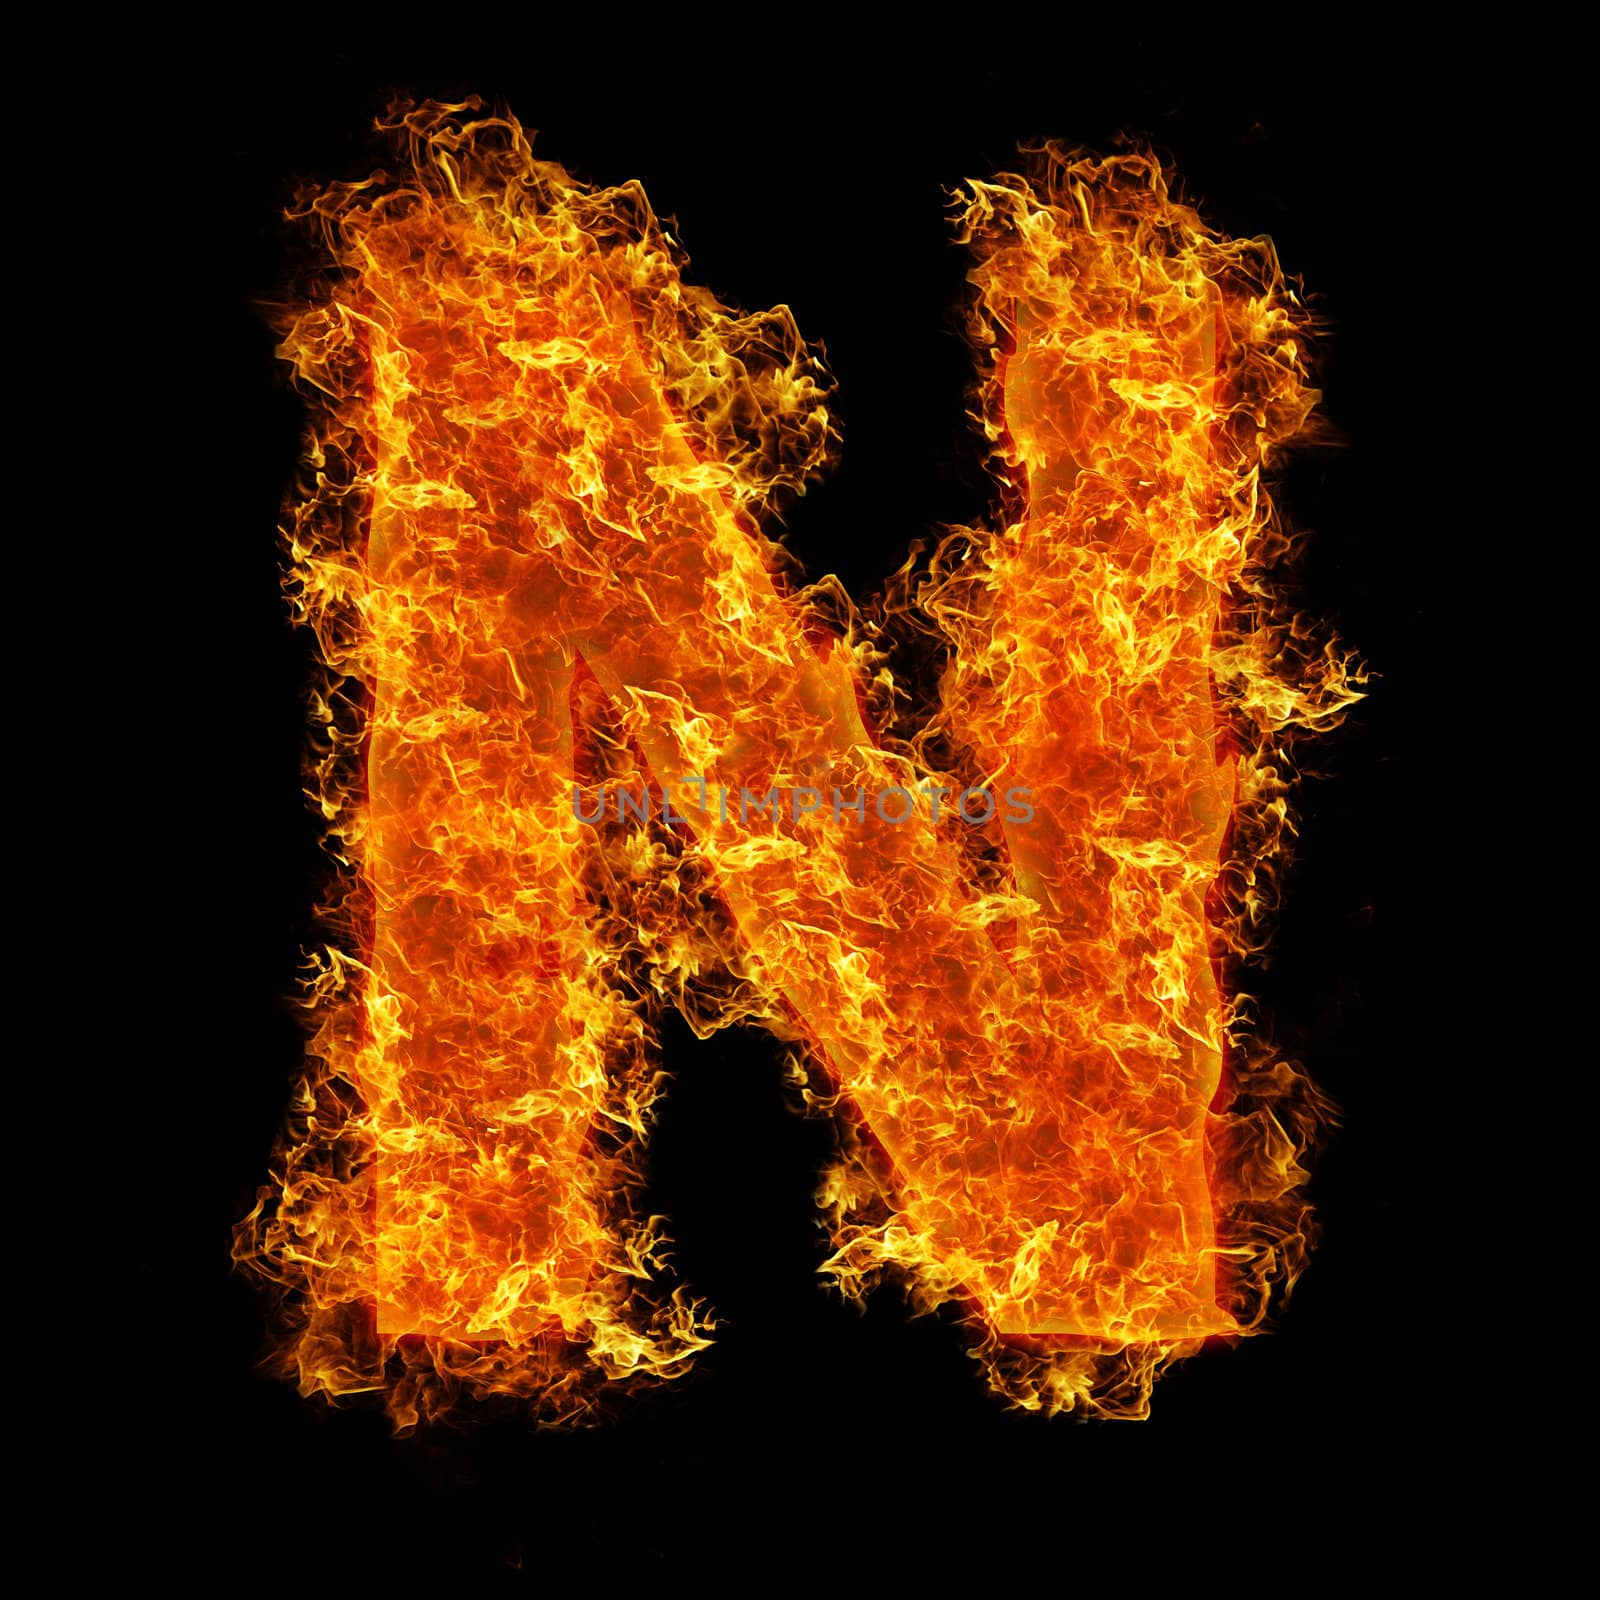 Fire letter N by rusak